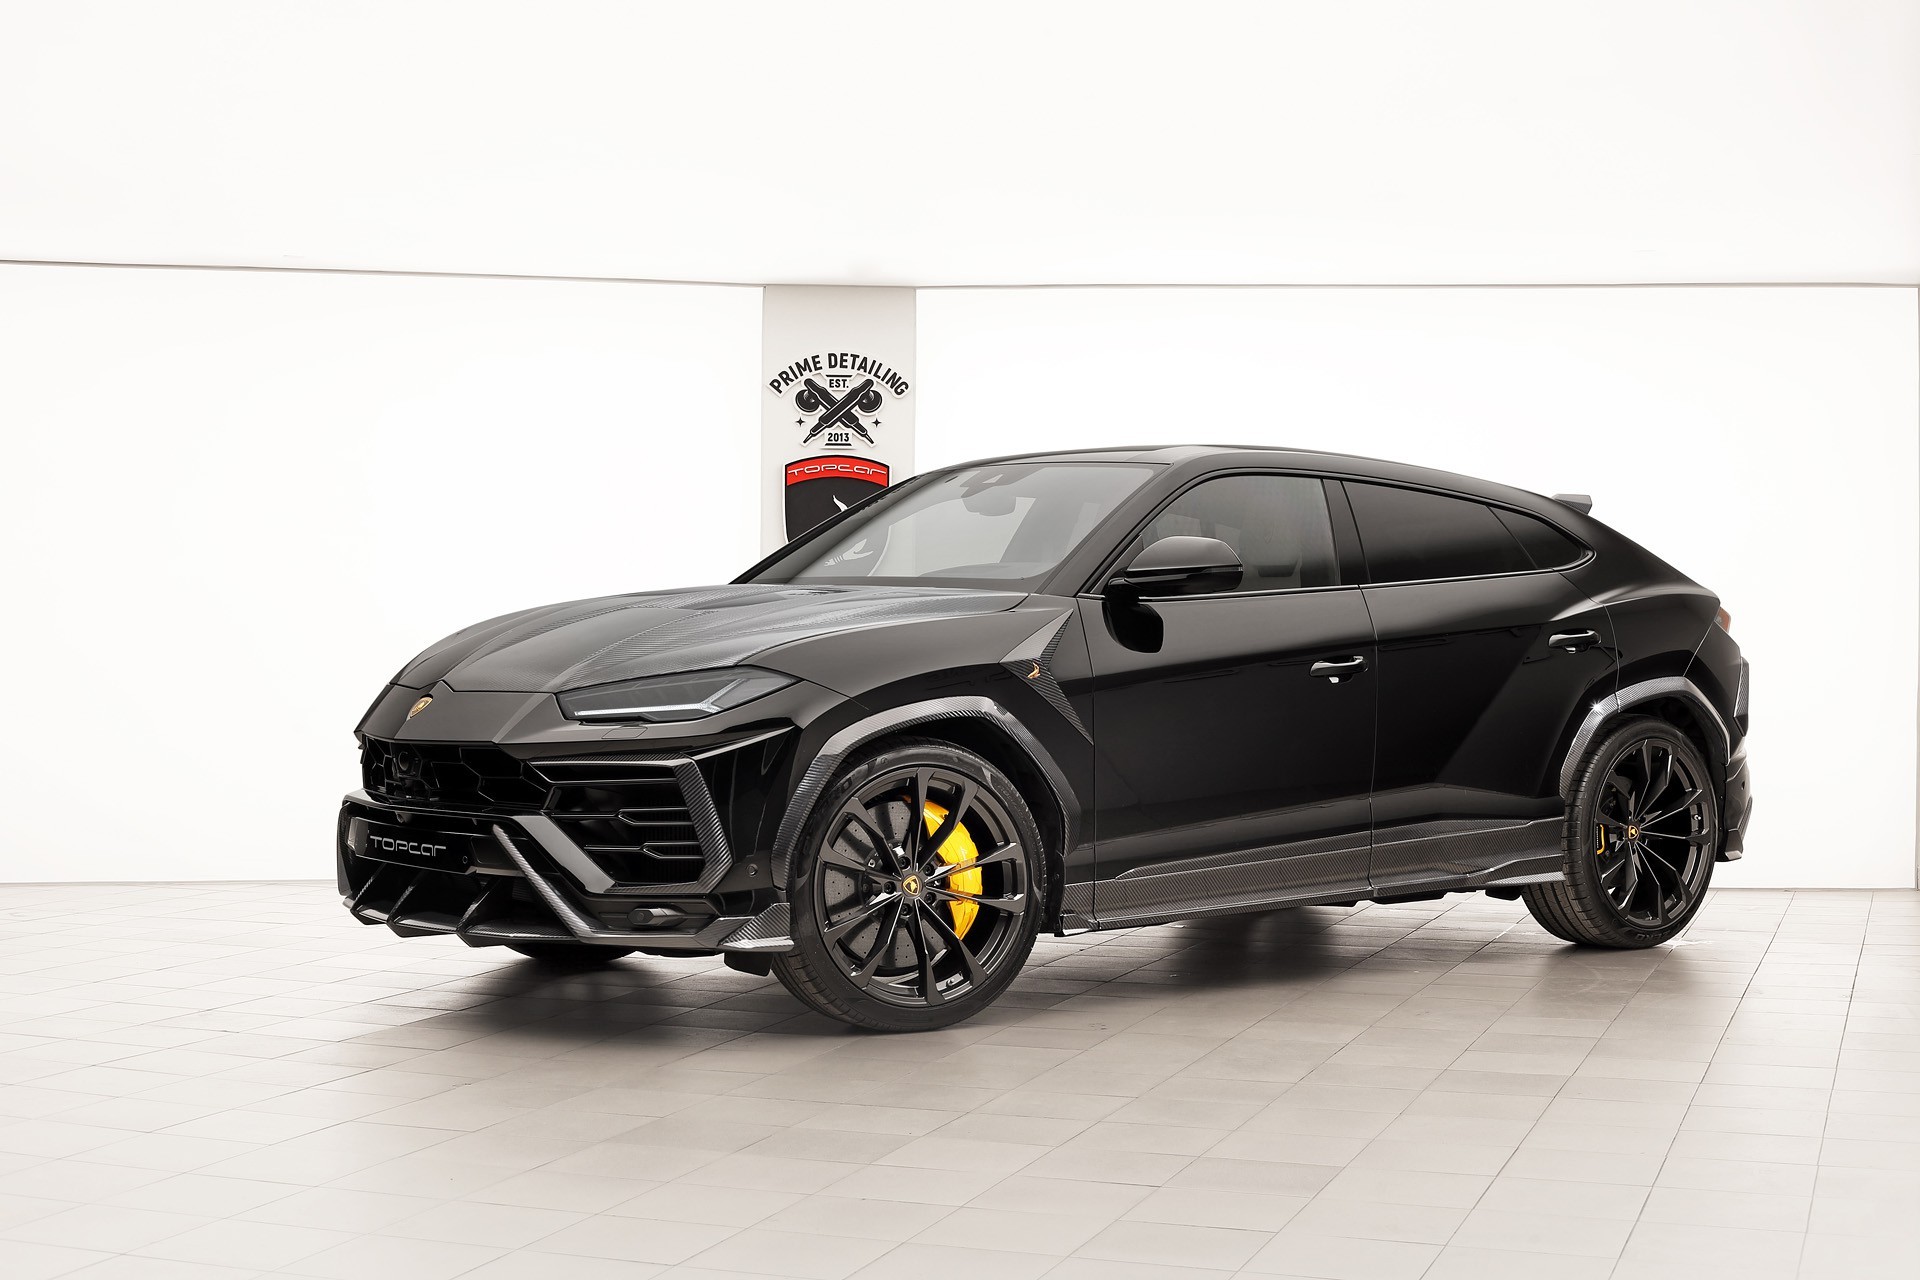 Lamborghini Urus By Topcar Looks Like Darth Vader's SUV Of ...